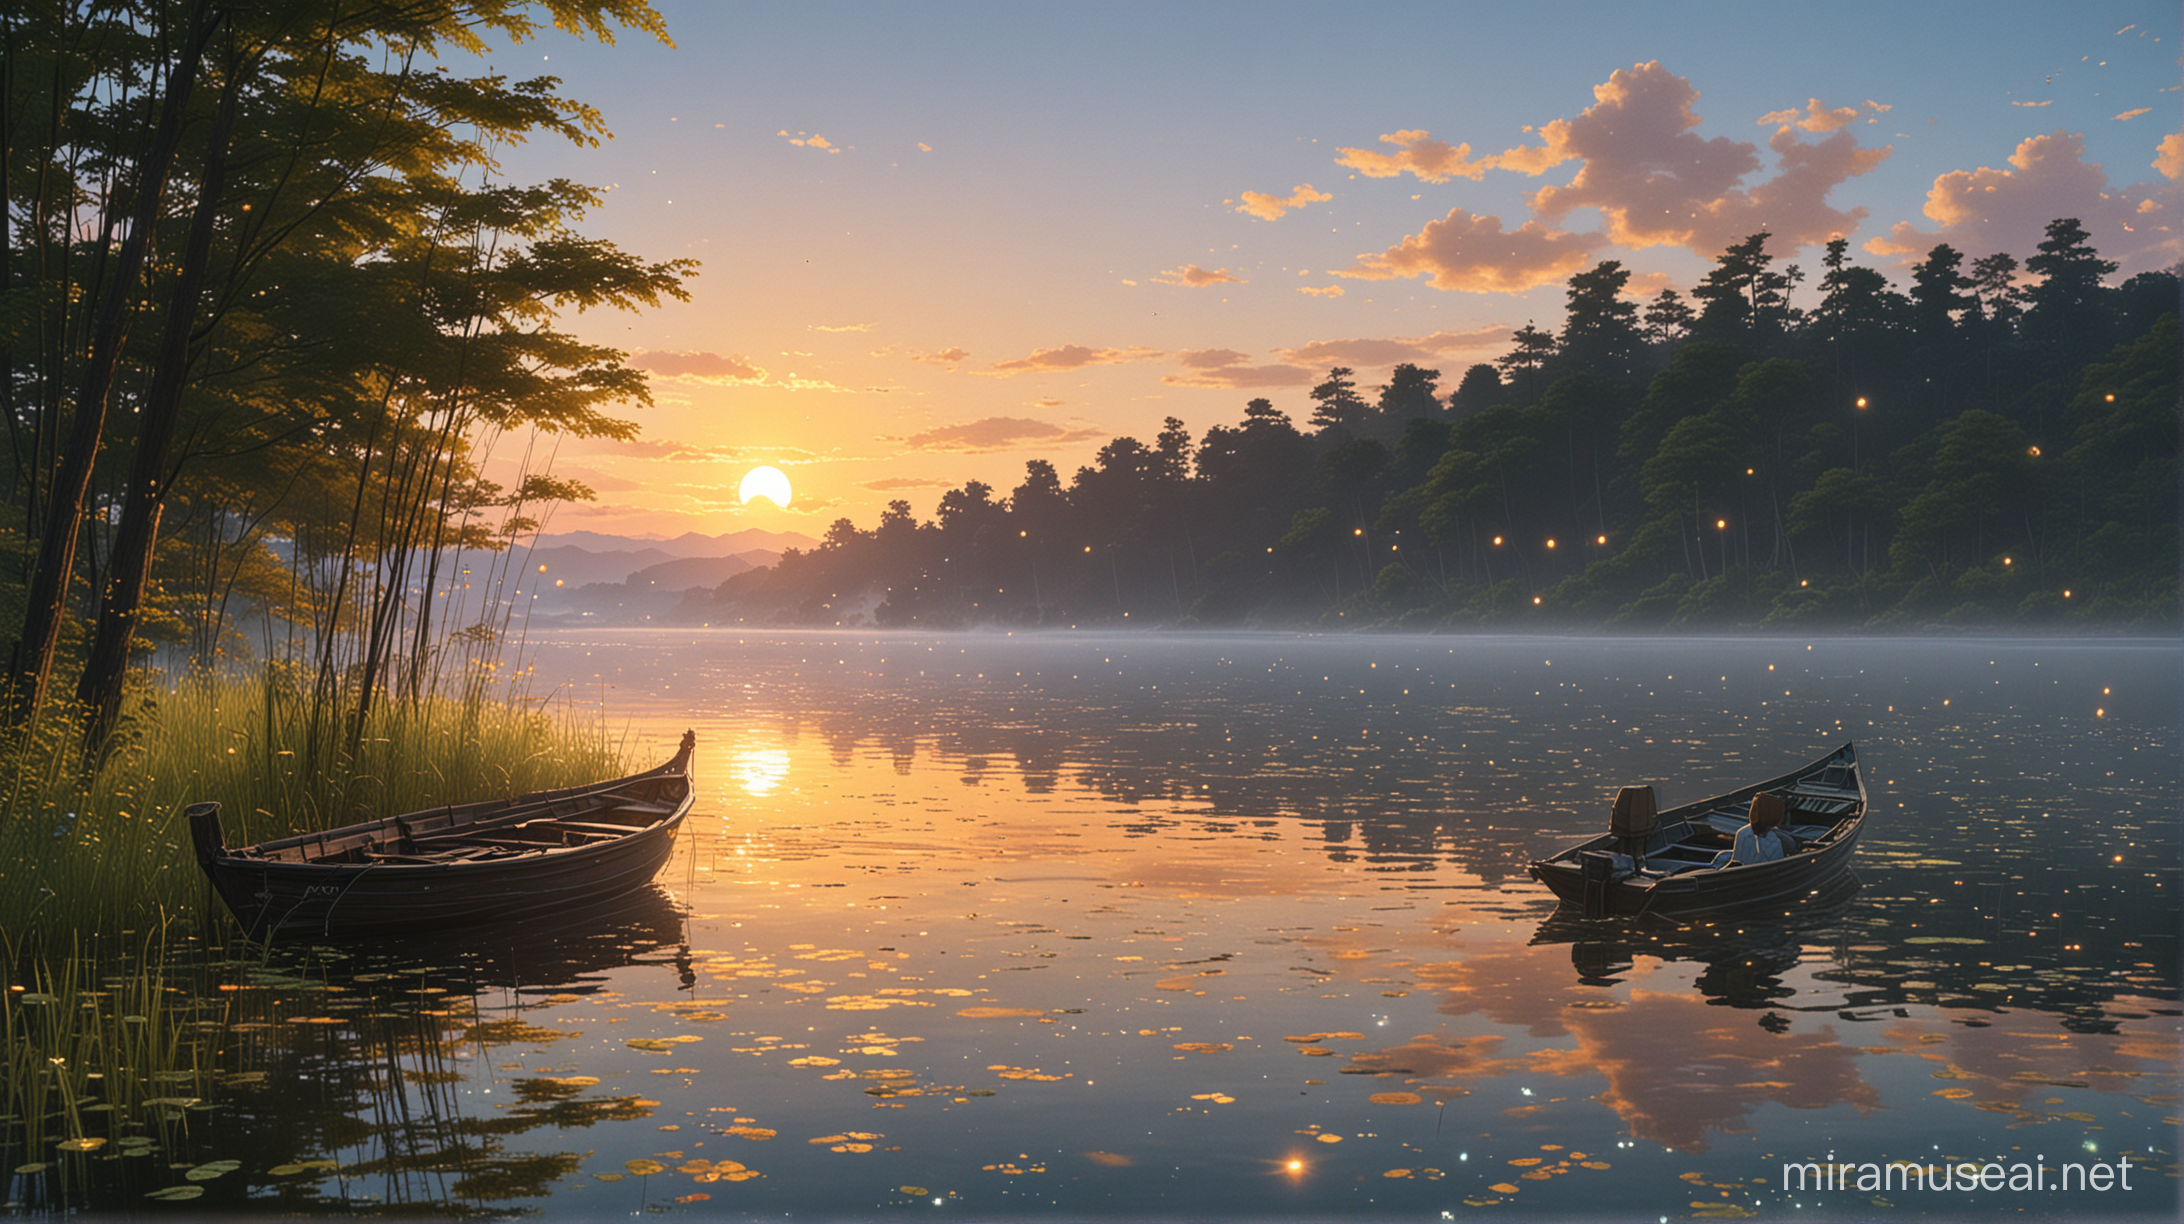 Majestic Lake Sunset with Fishing Boat and Fireflies